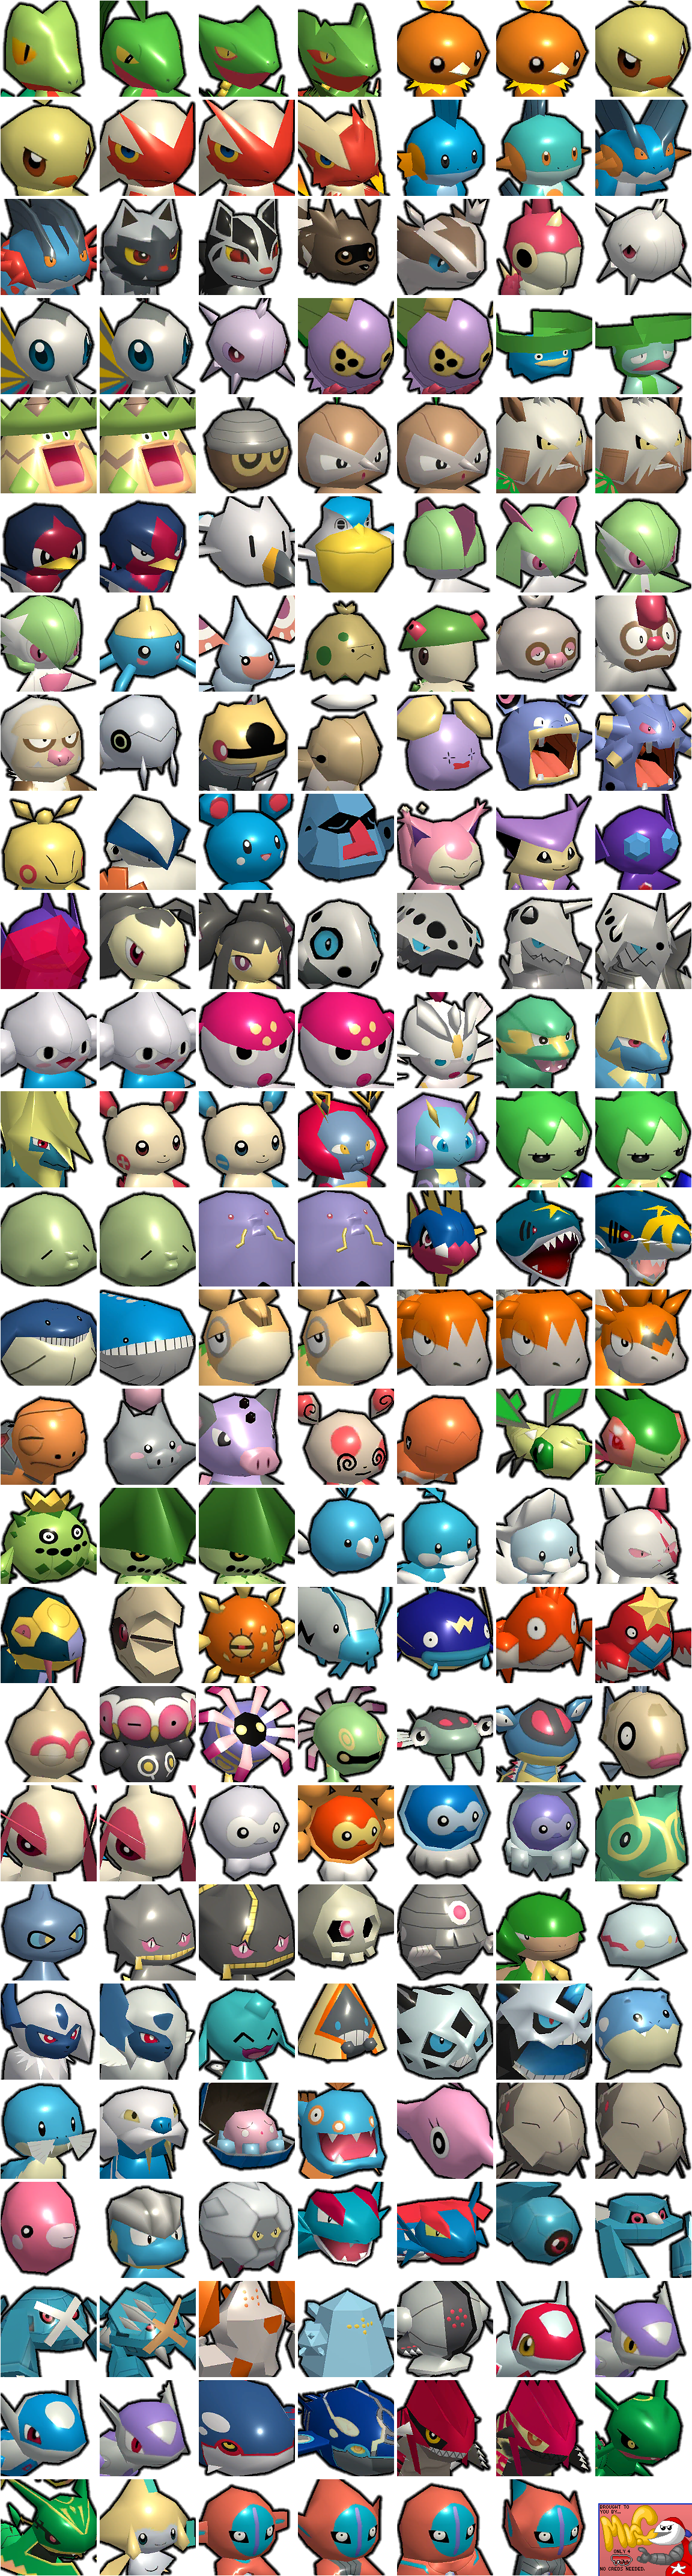 Pokémon Rumble Rush - Pokémon Icons (3rd Generation)